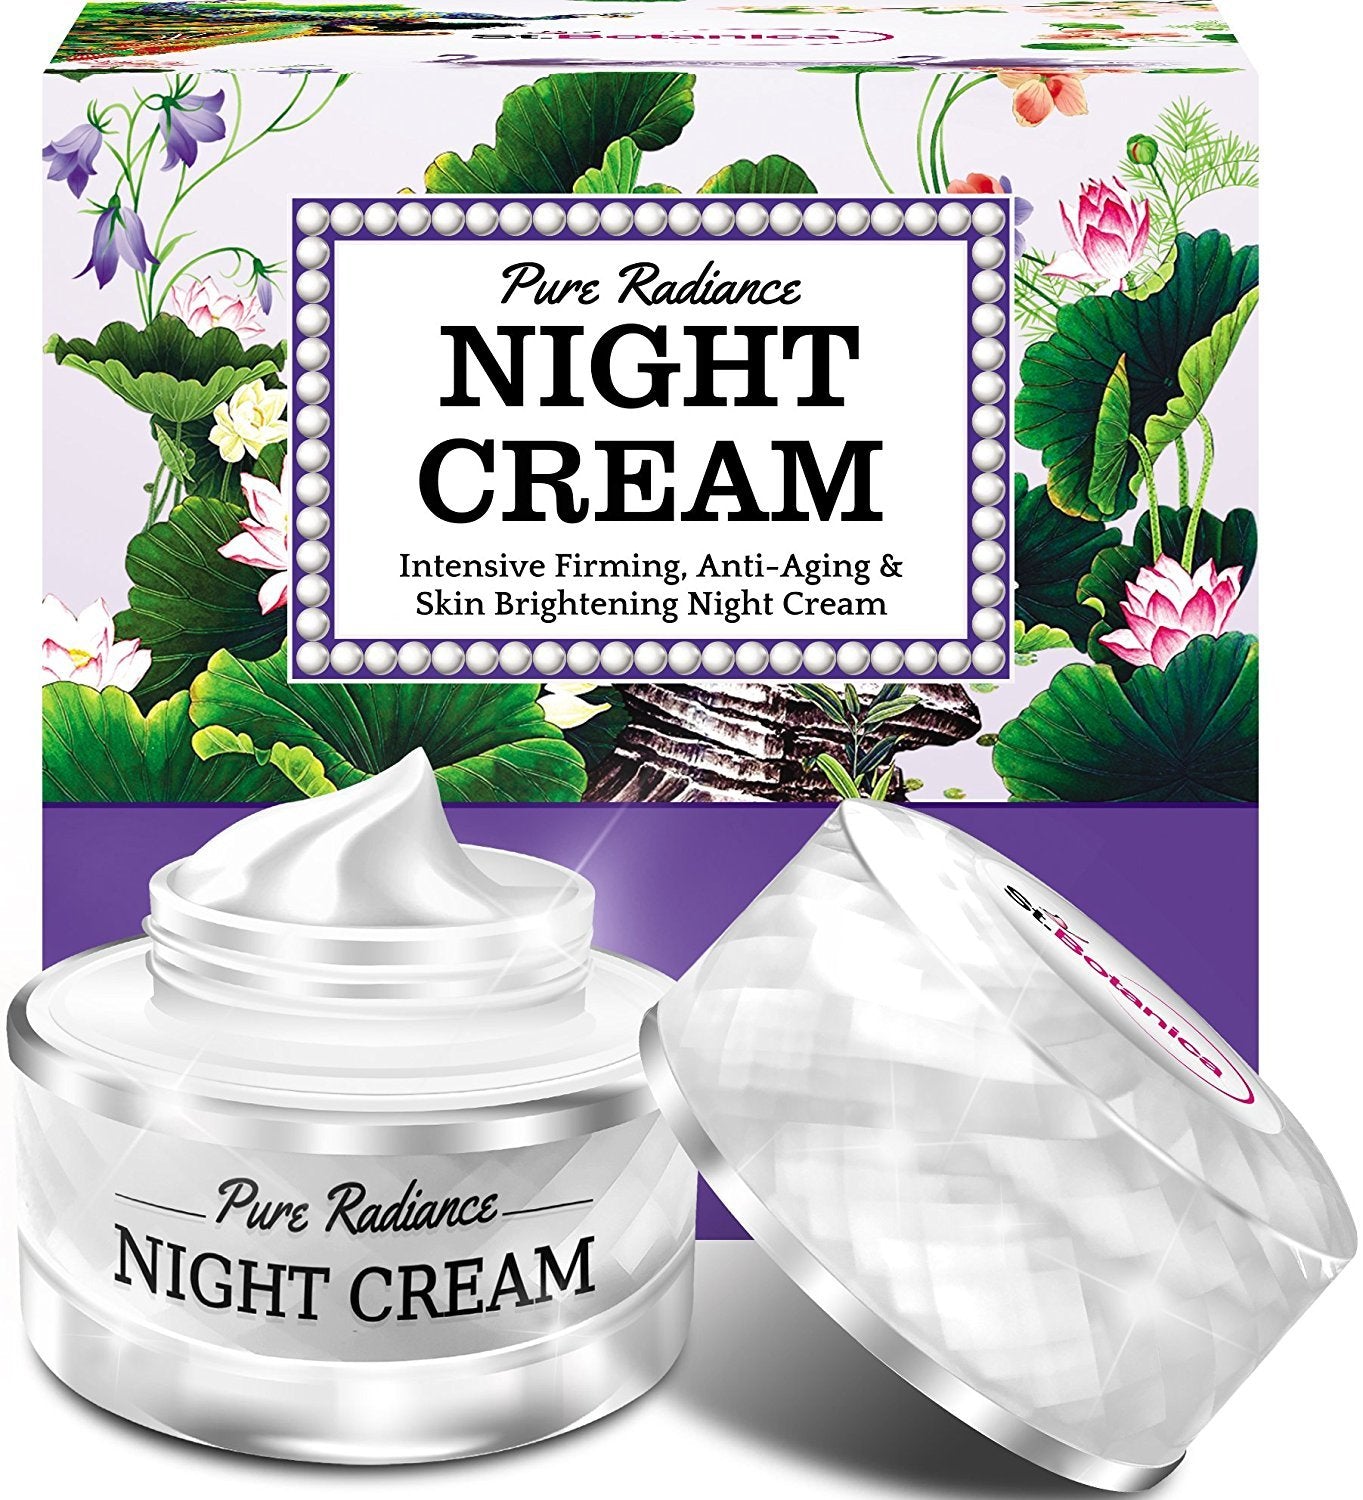 St.Botanica Pure Radiance Night Cream - Intensive Firming, Anti-Aging & Skin Brightening, 50gm (With Vitamin C, Retinol, Hyaluronic acid, Collagen)